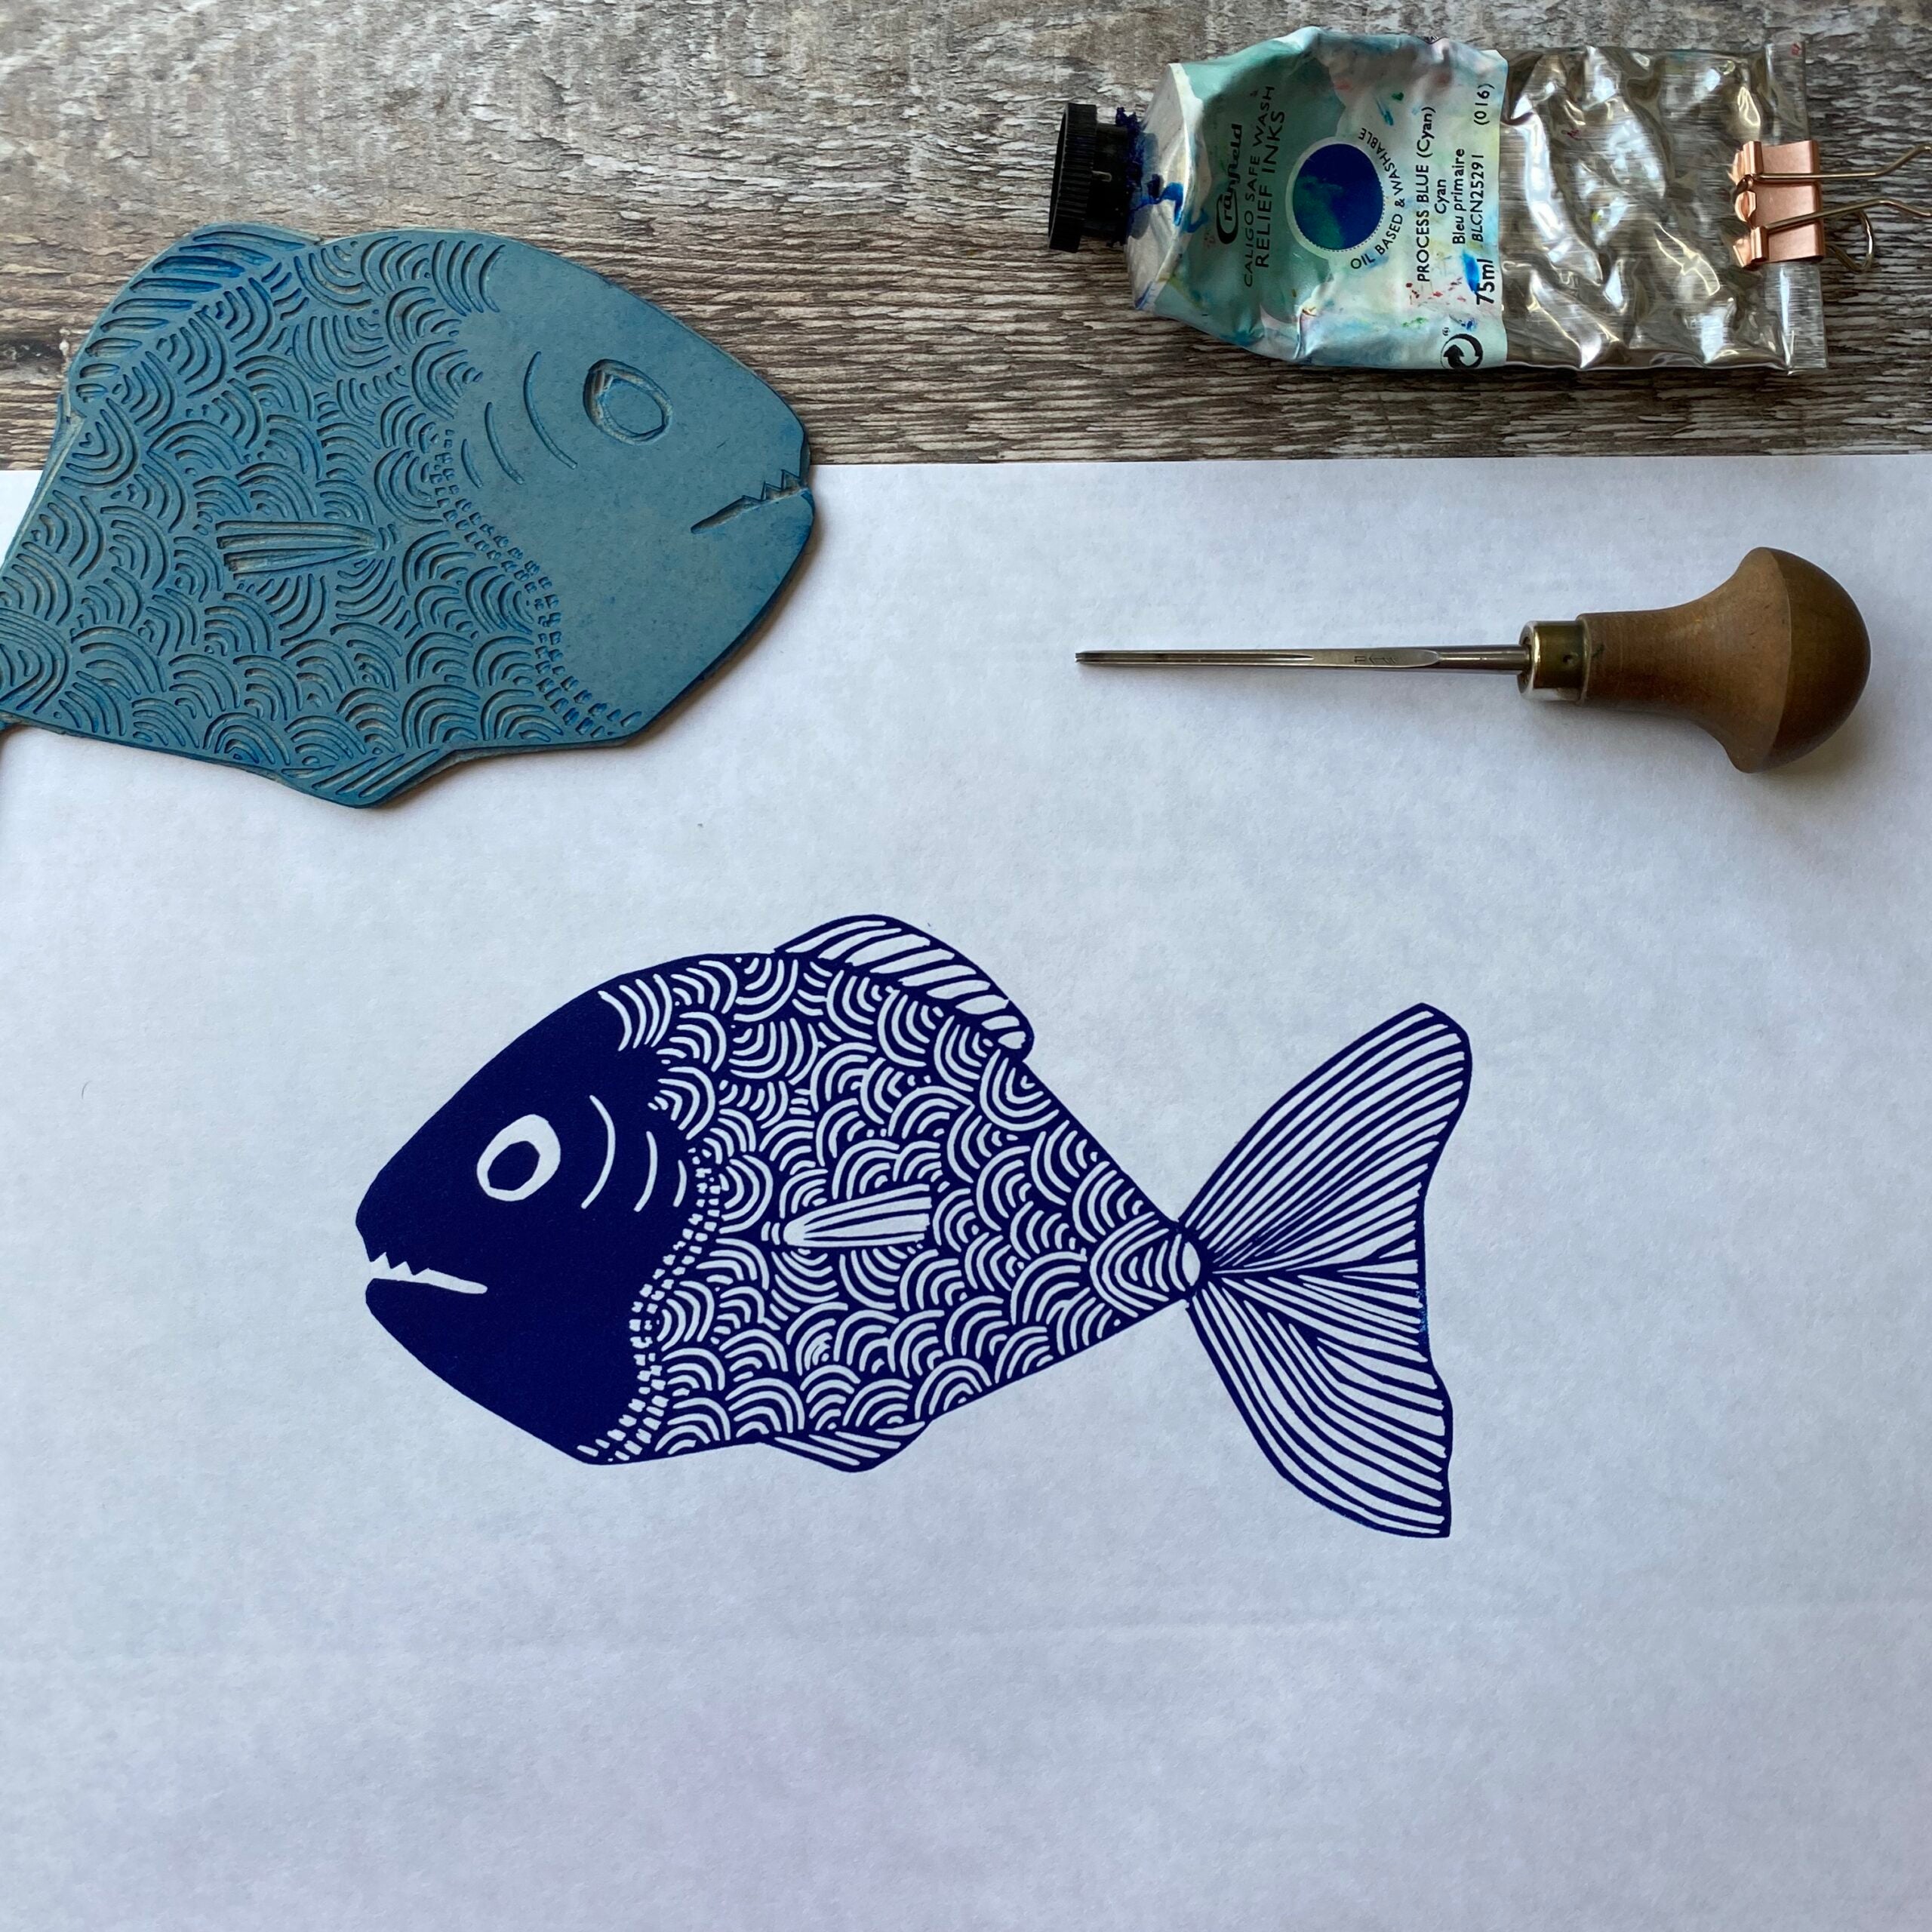 Little Nipper Fish - Original Linocut Print